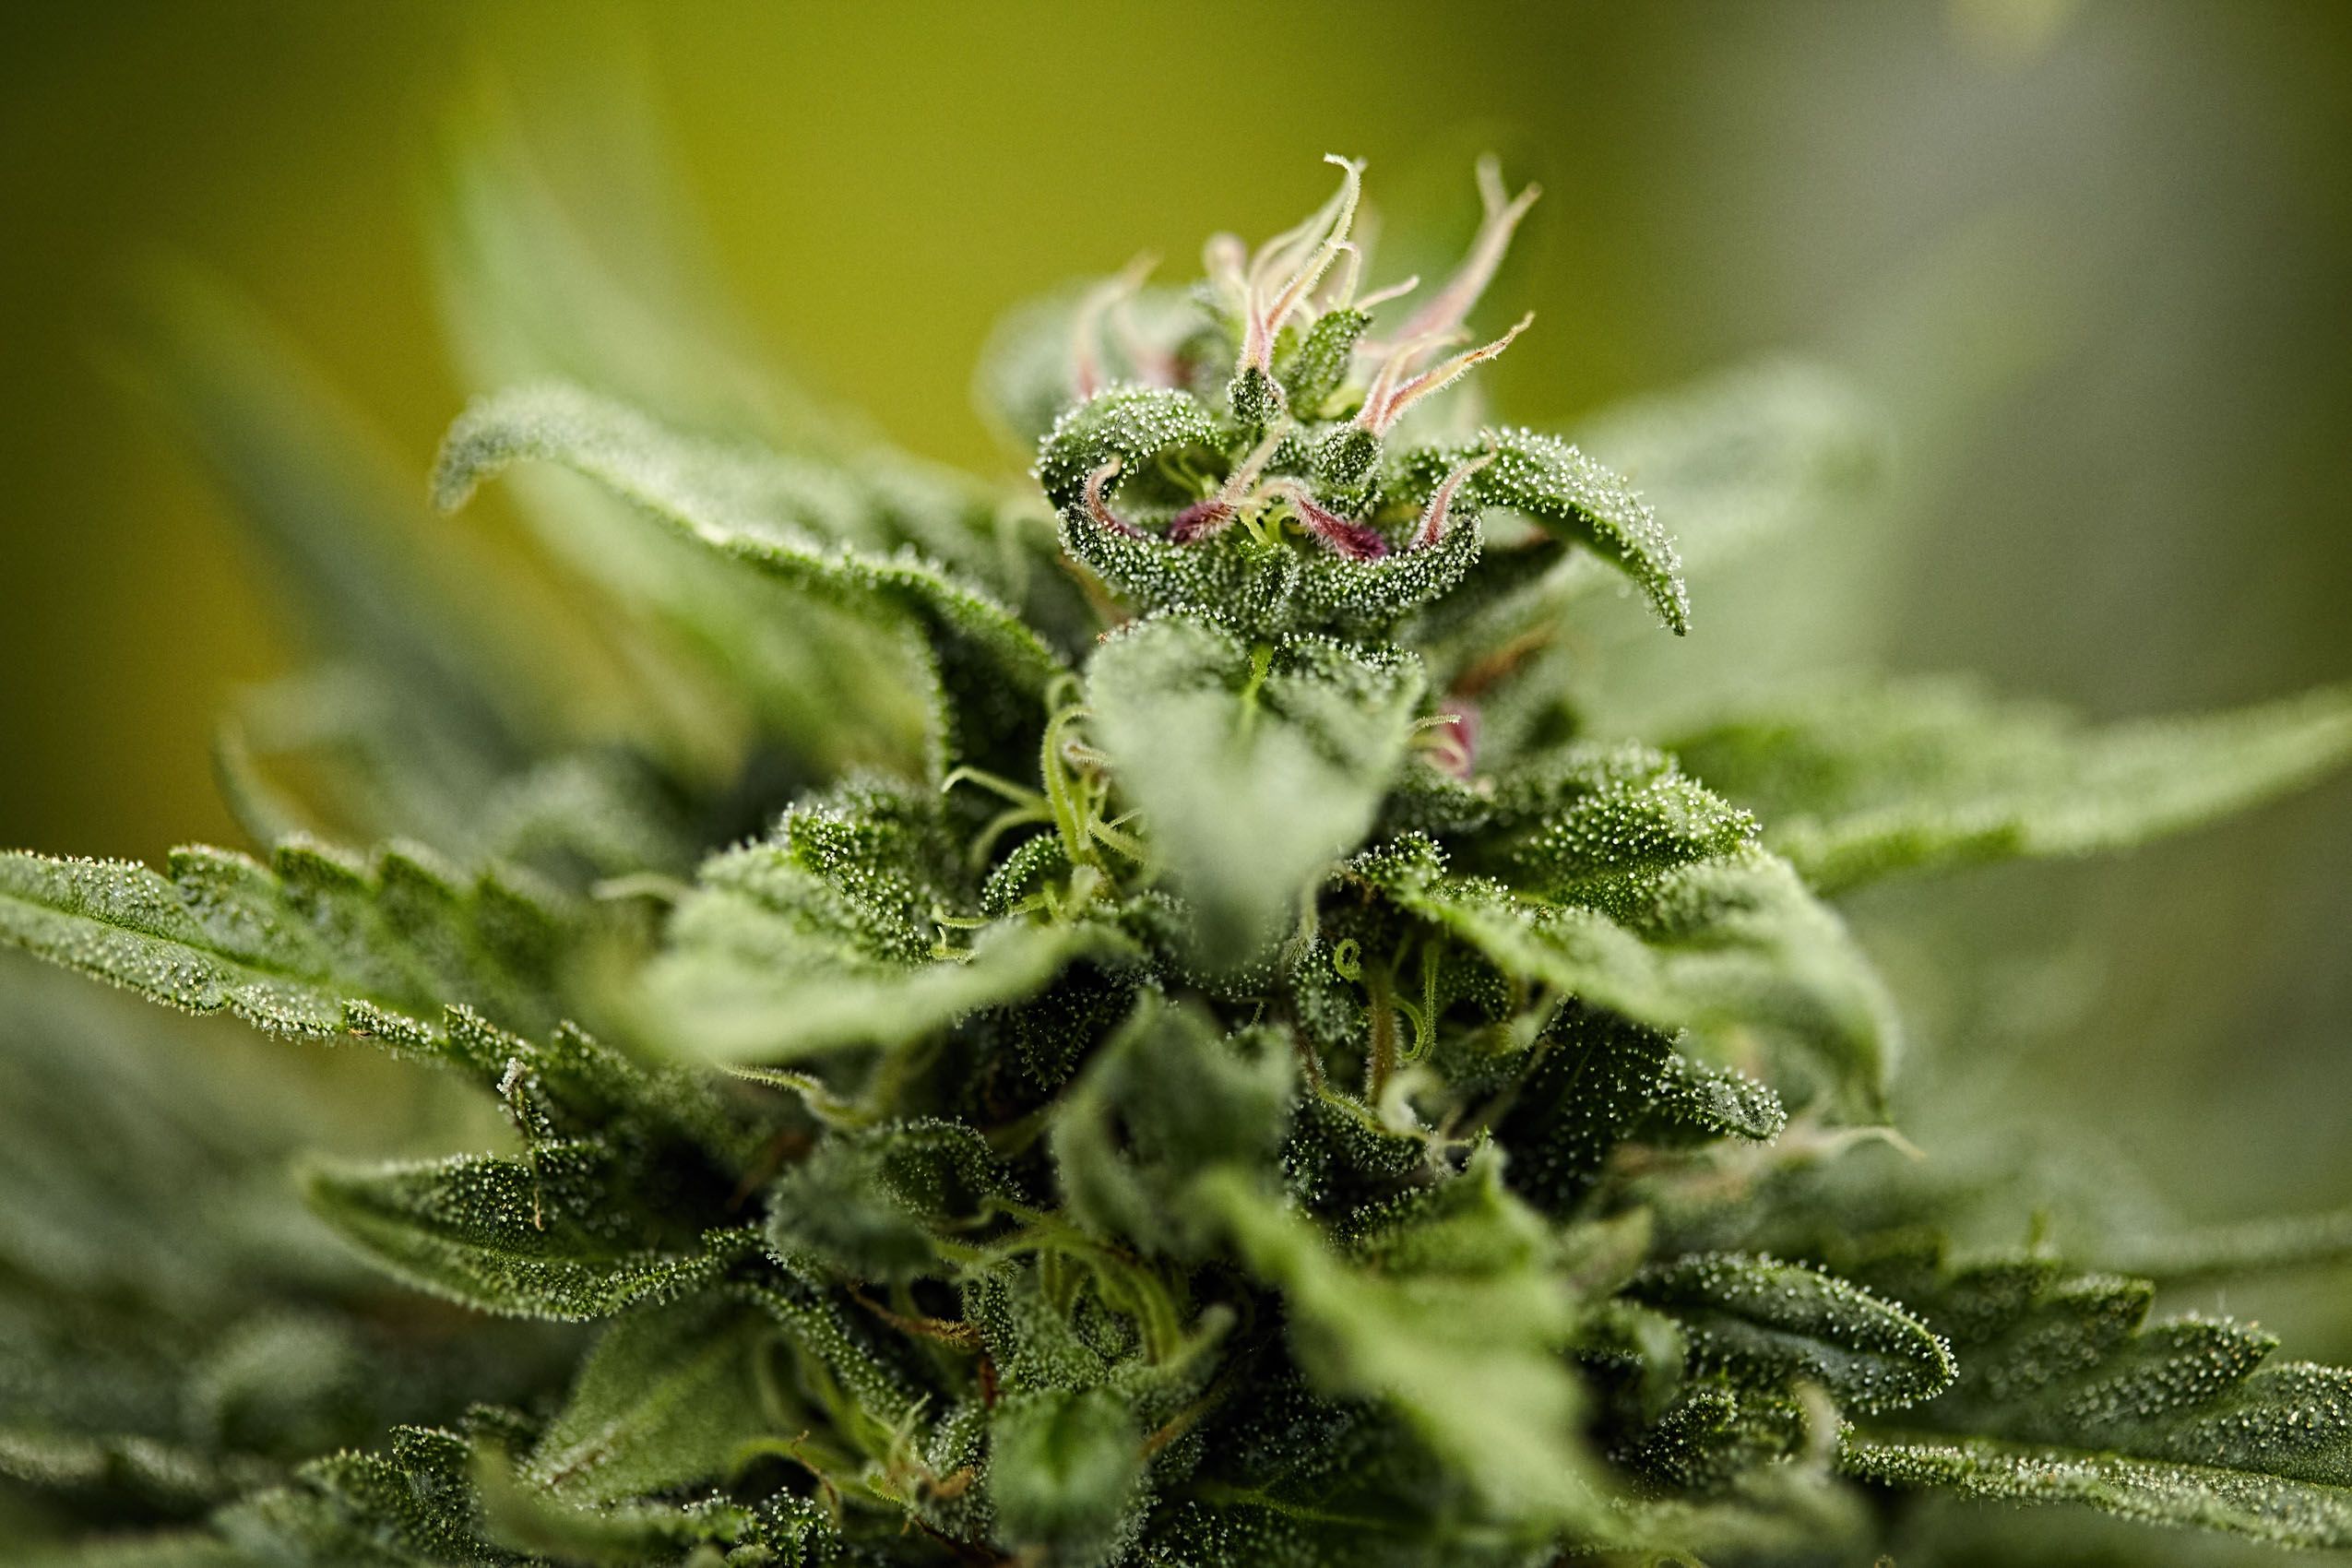 Flowering Cannabis